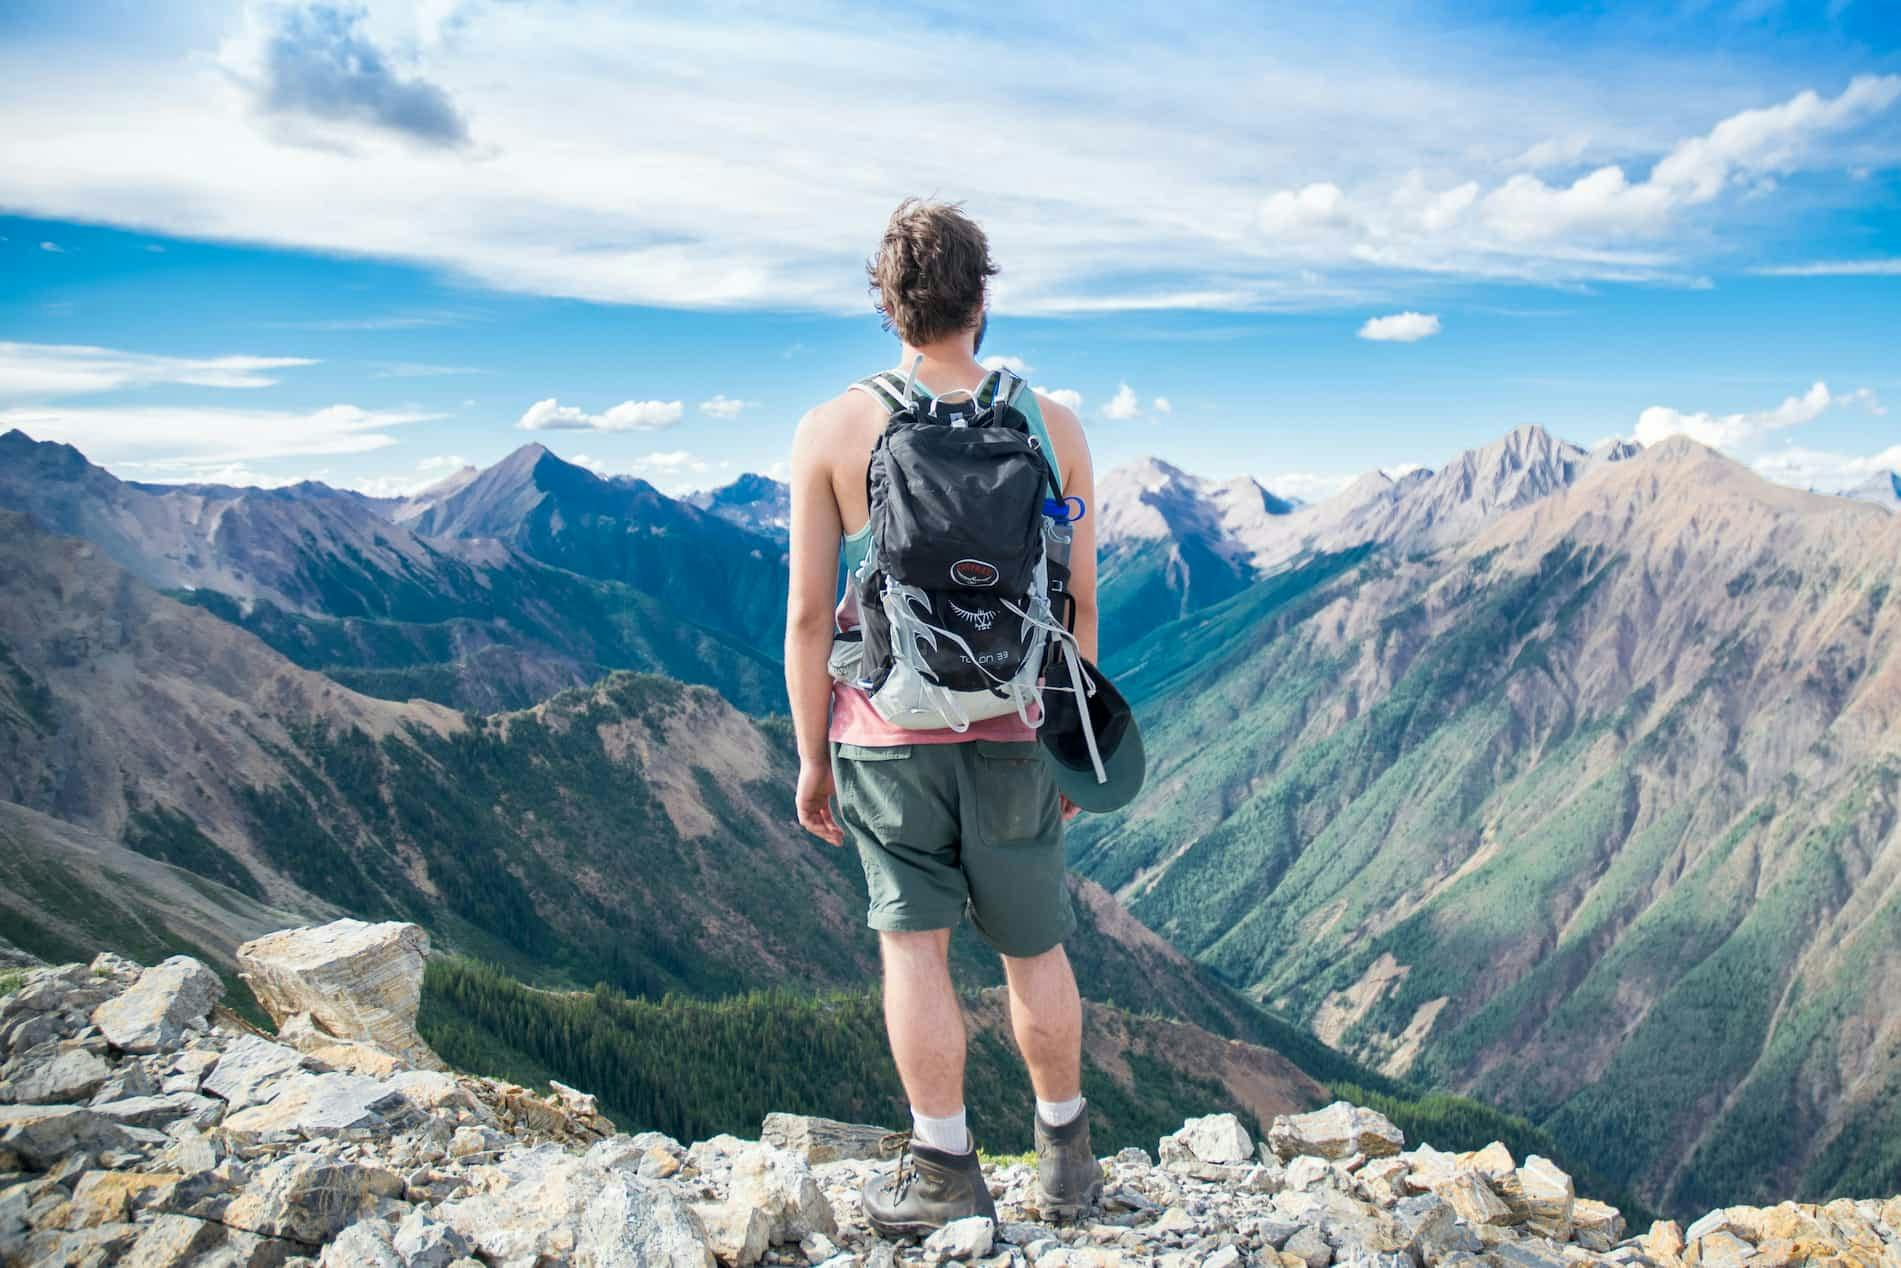 a backpacker on a hilsside surveying the landscape